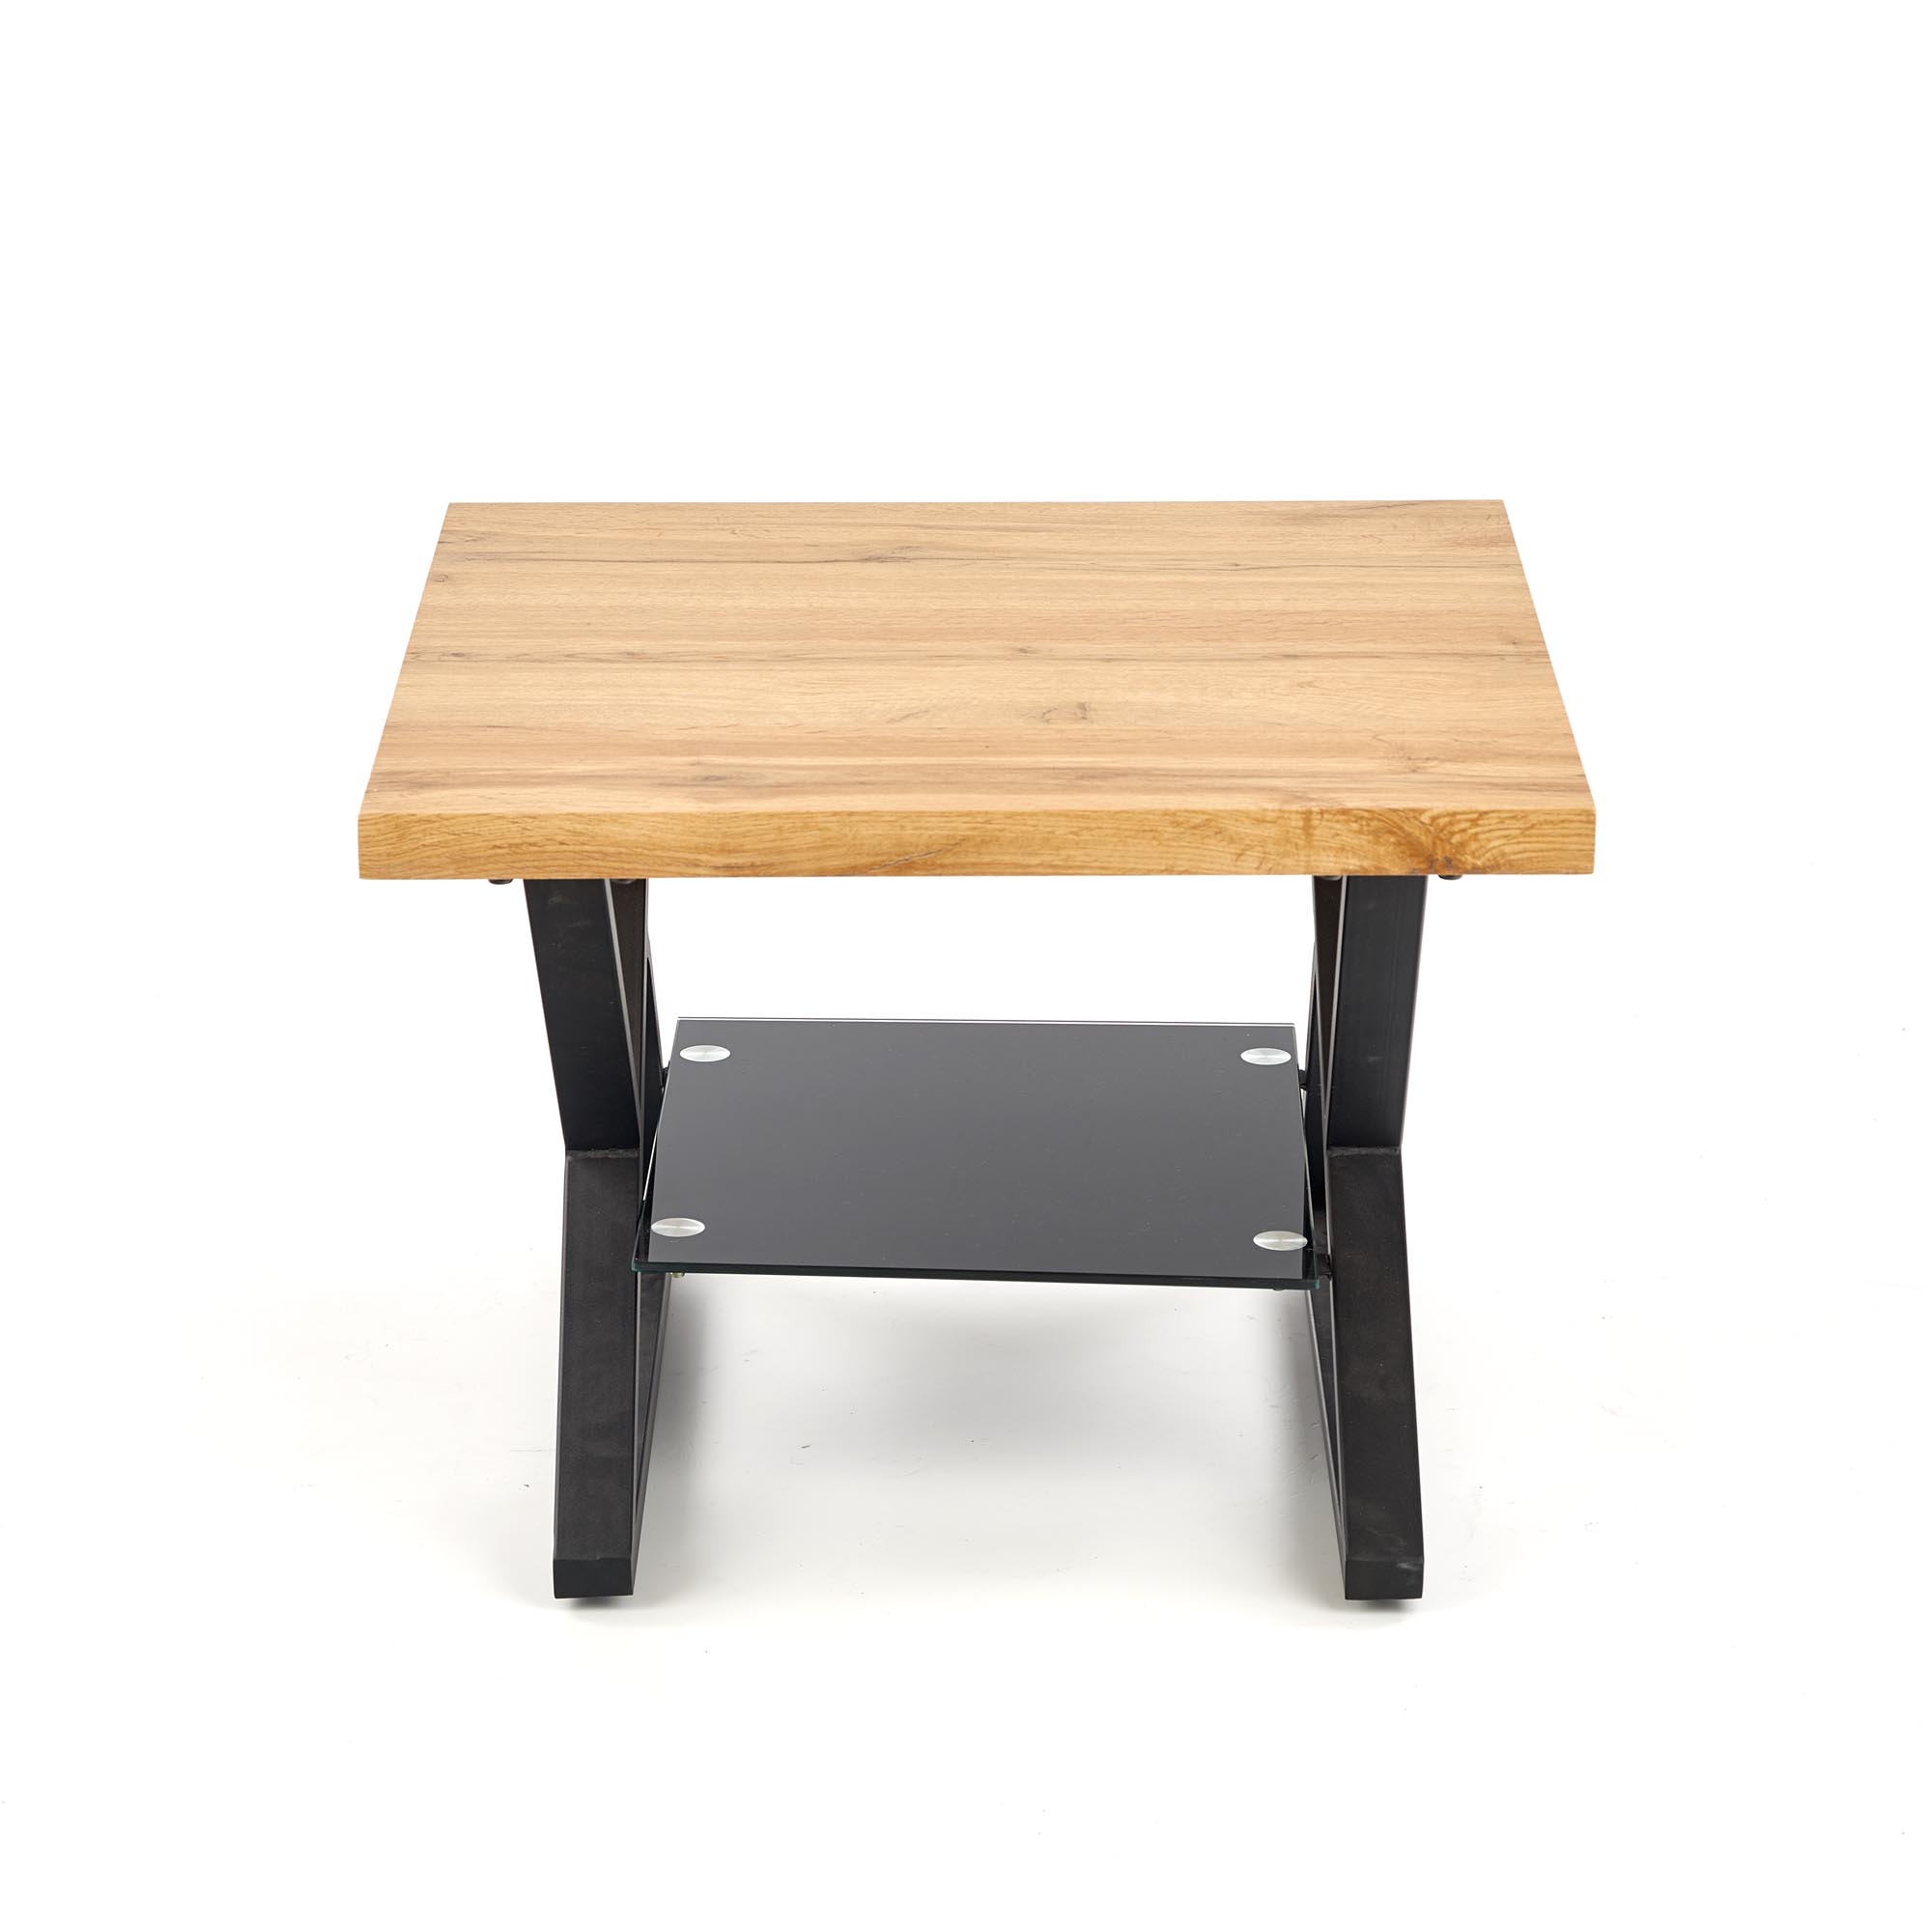 XENA KWADRAT dohányzóasztal - fekete / natúr xena Čtverec Konferenční stolek Fekete / přírodní